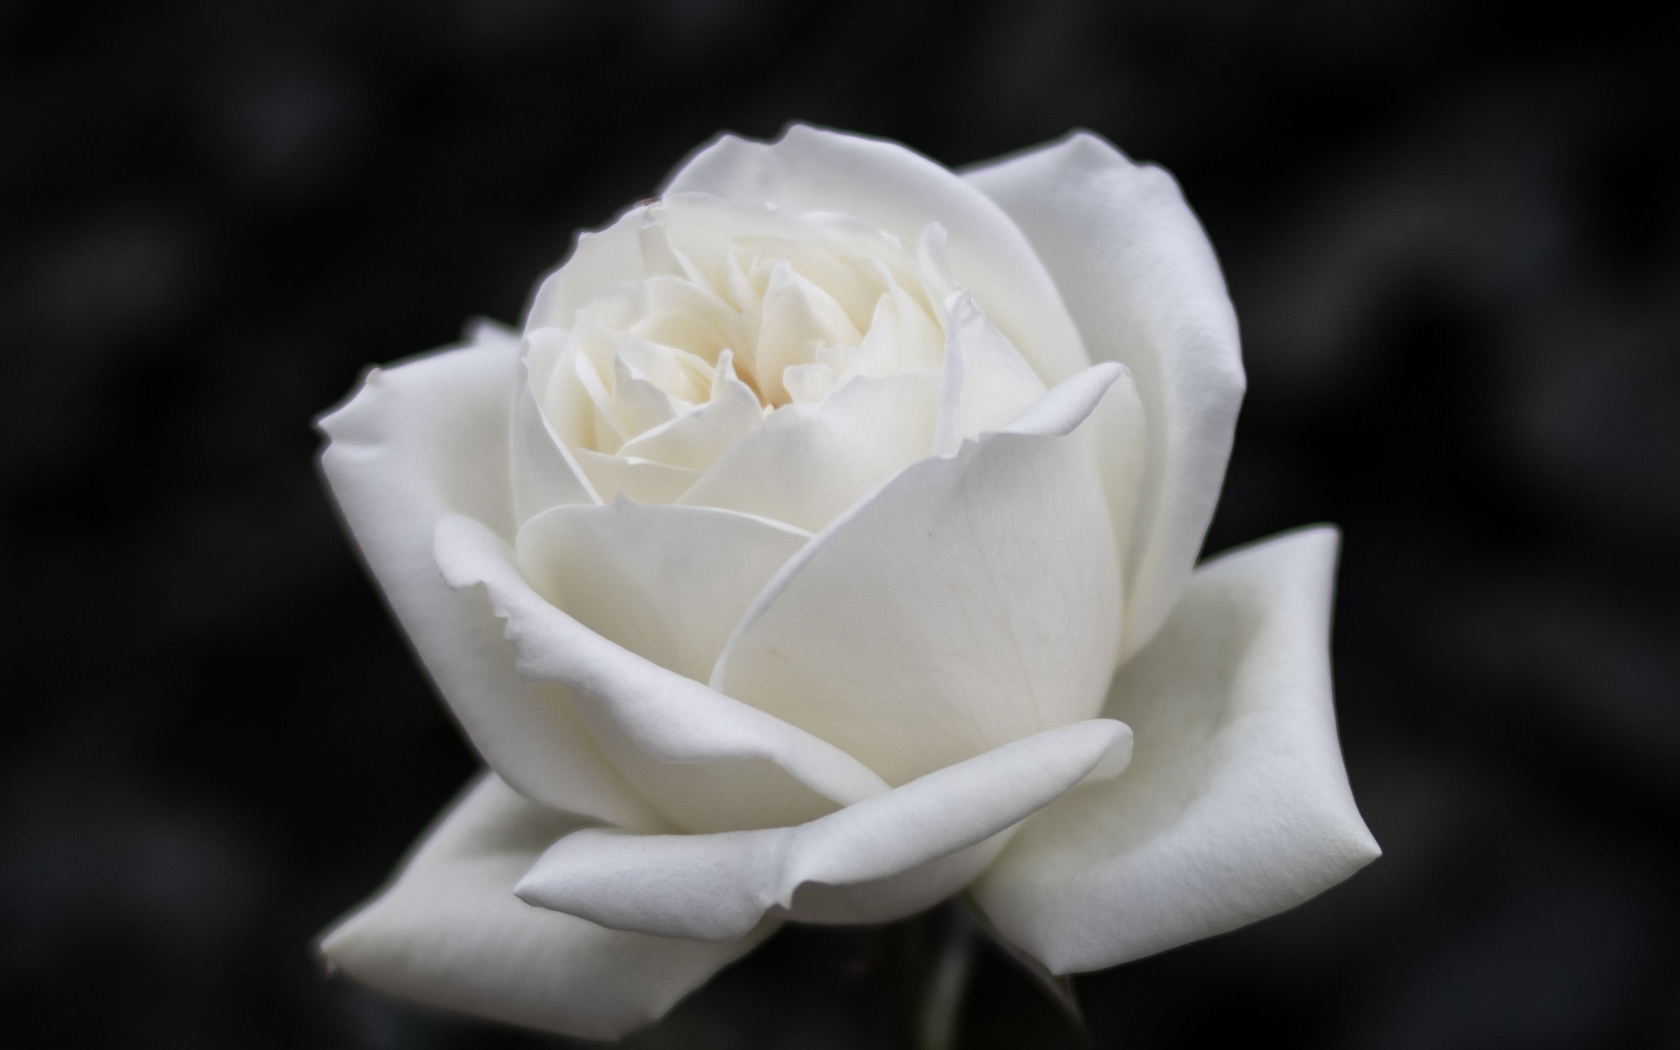 Beautiful white rose flower on black background